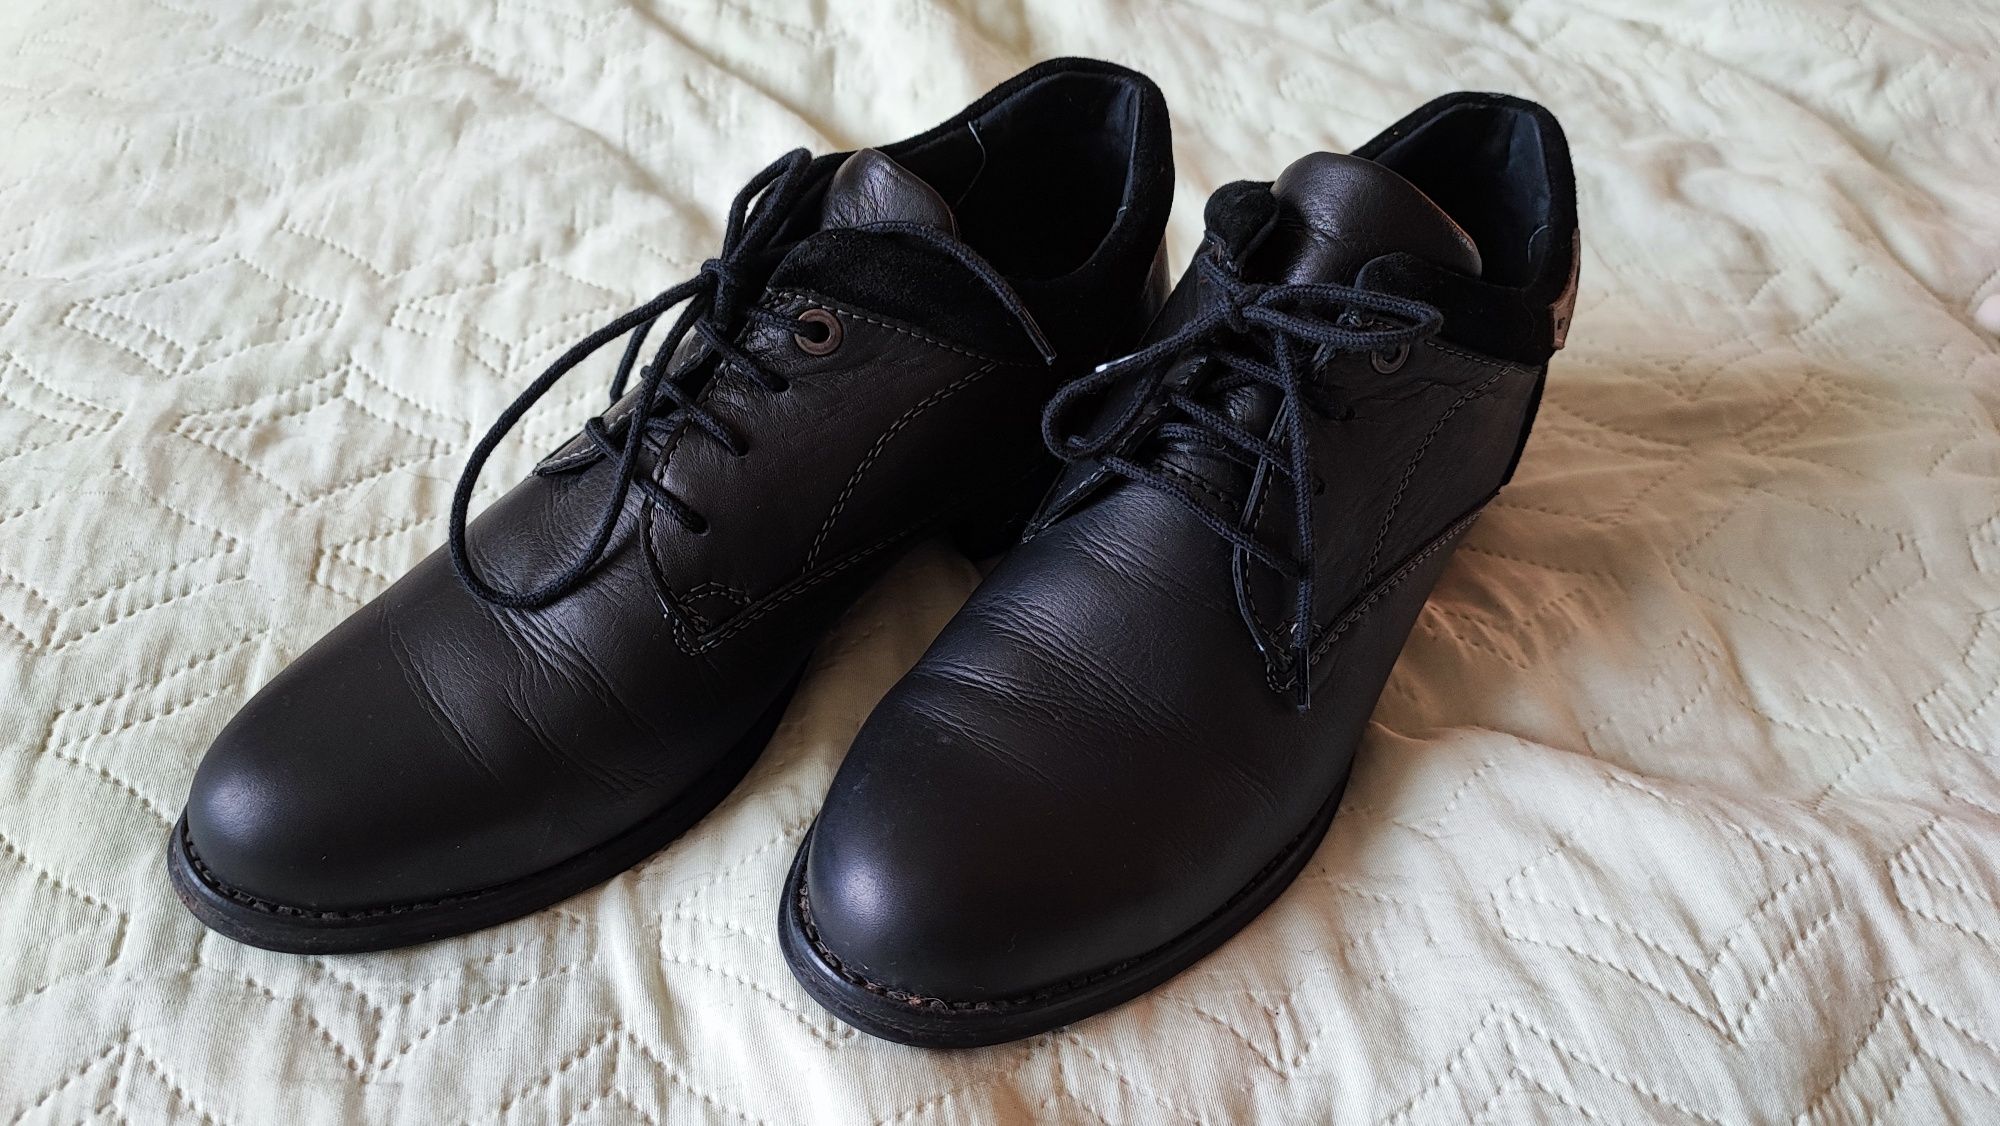 Дамски черни обувки Real, естествена кожа, 39 номер,